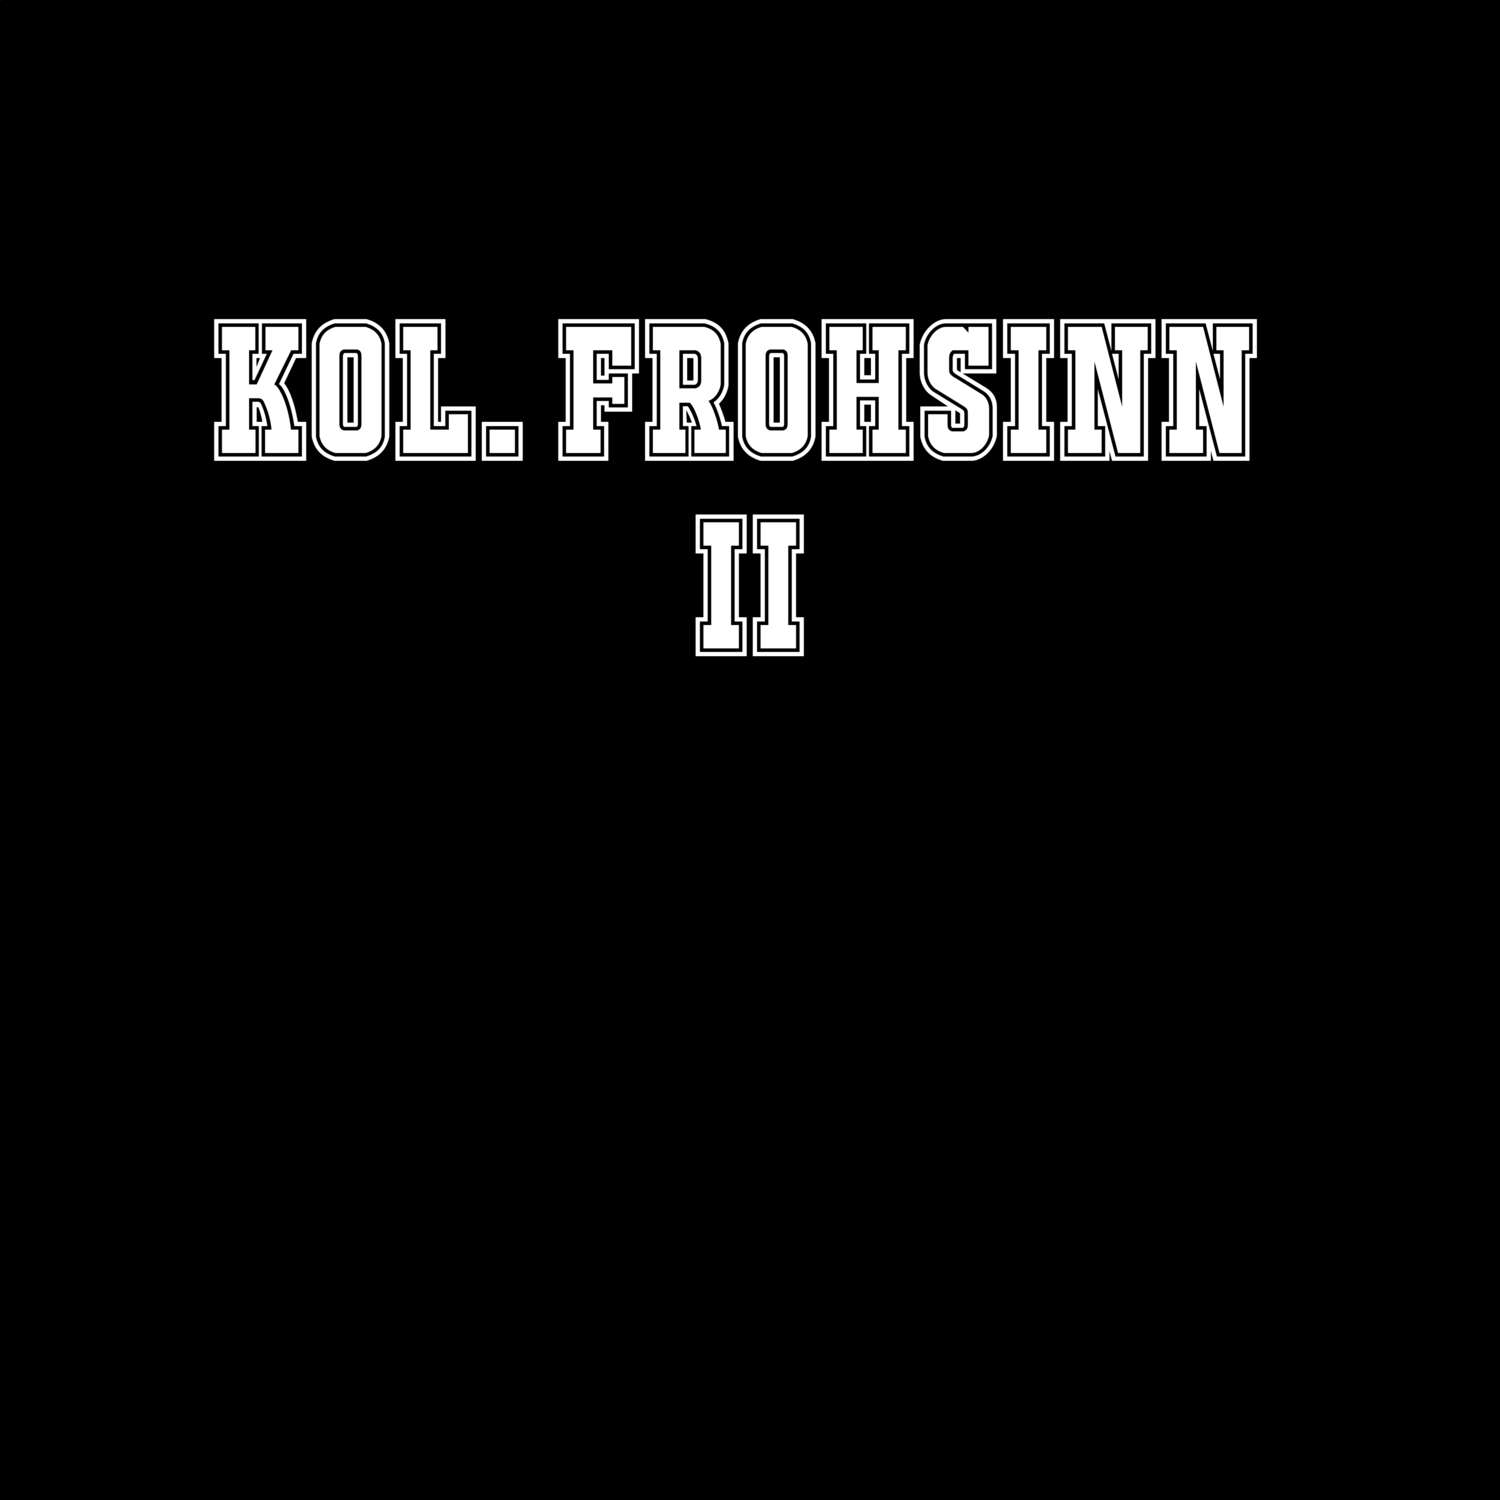 Kol. Frohsinn II T-Shirt »Classic«